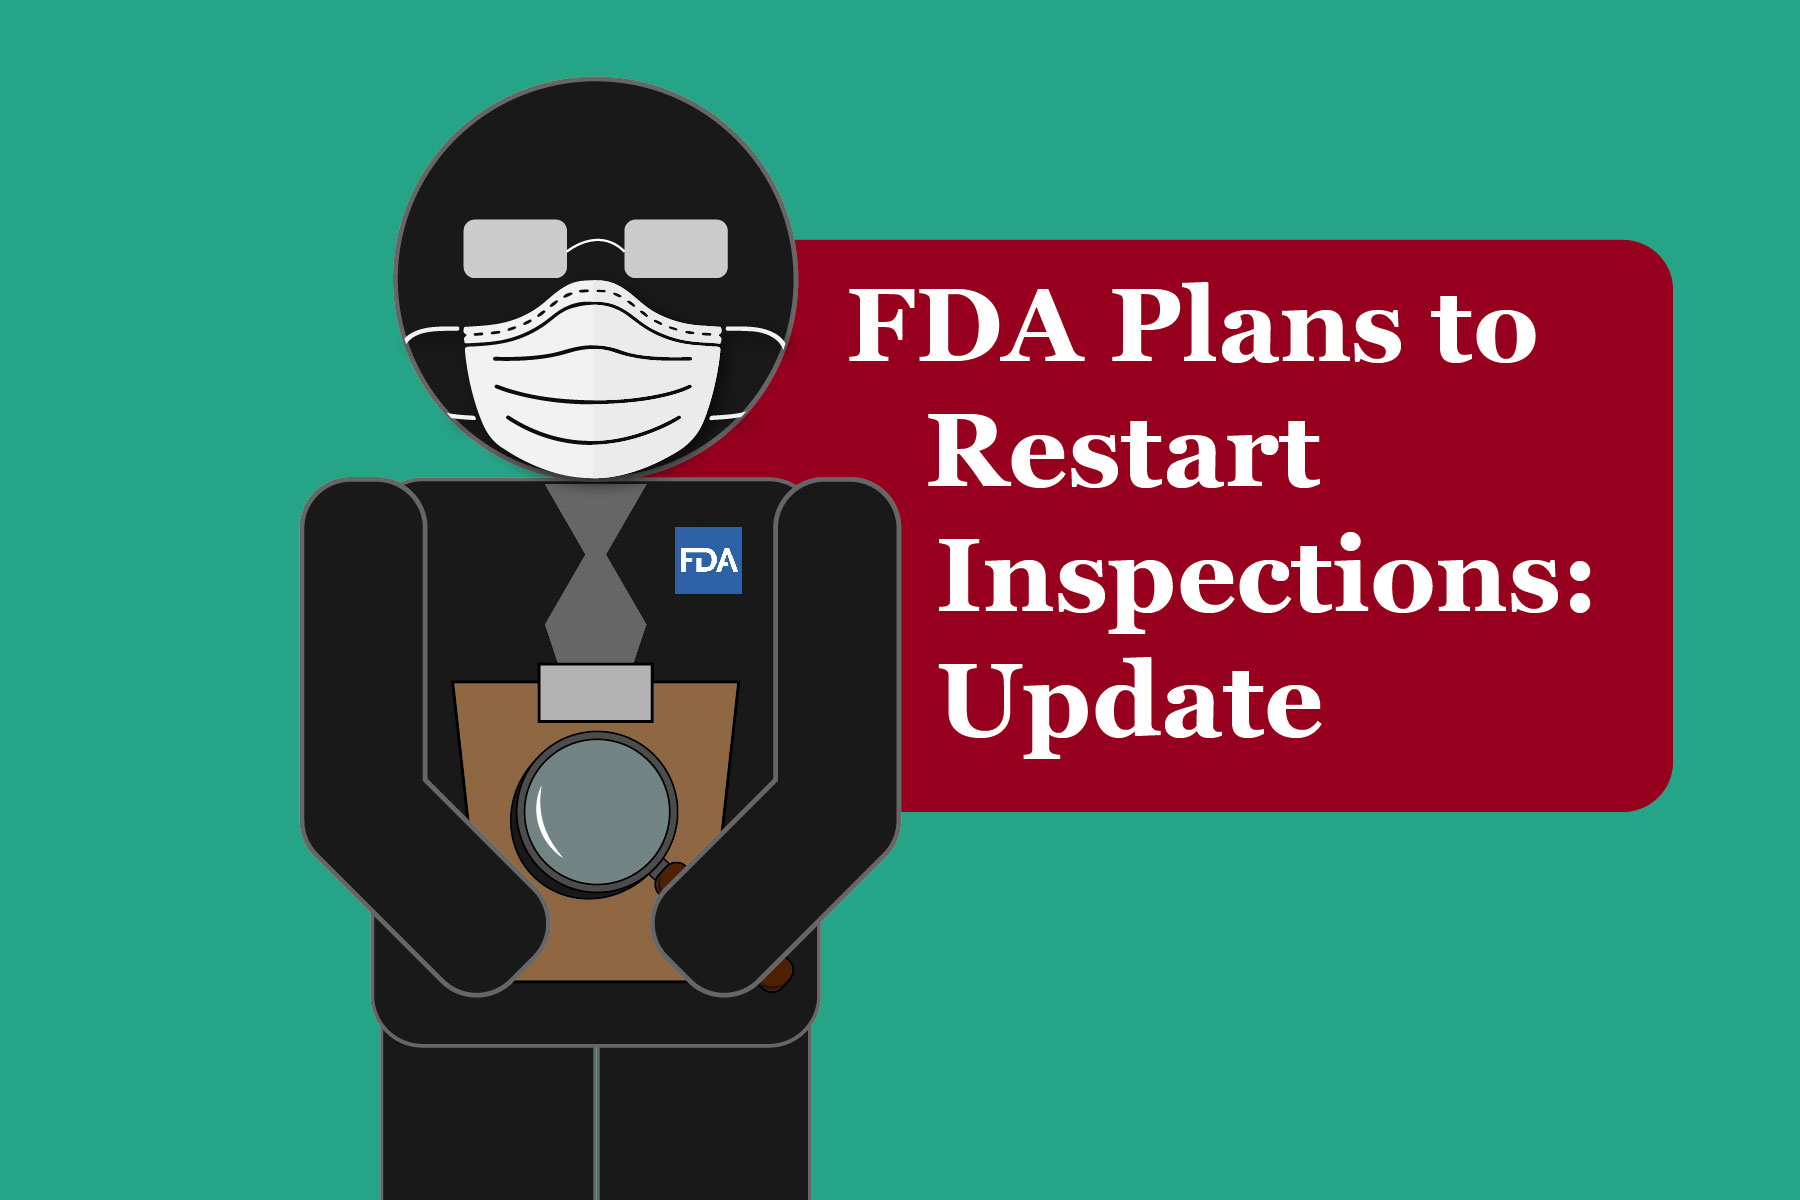 FDA Plans to Restart Inspections: Update